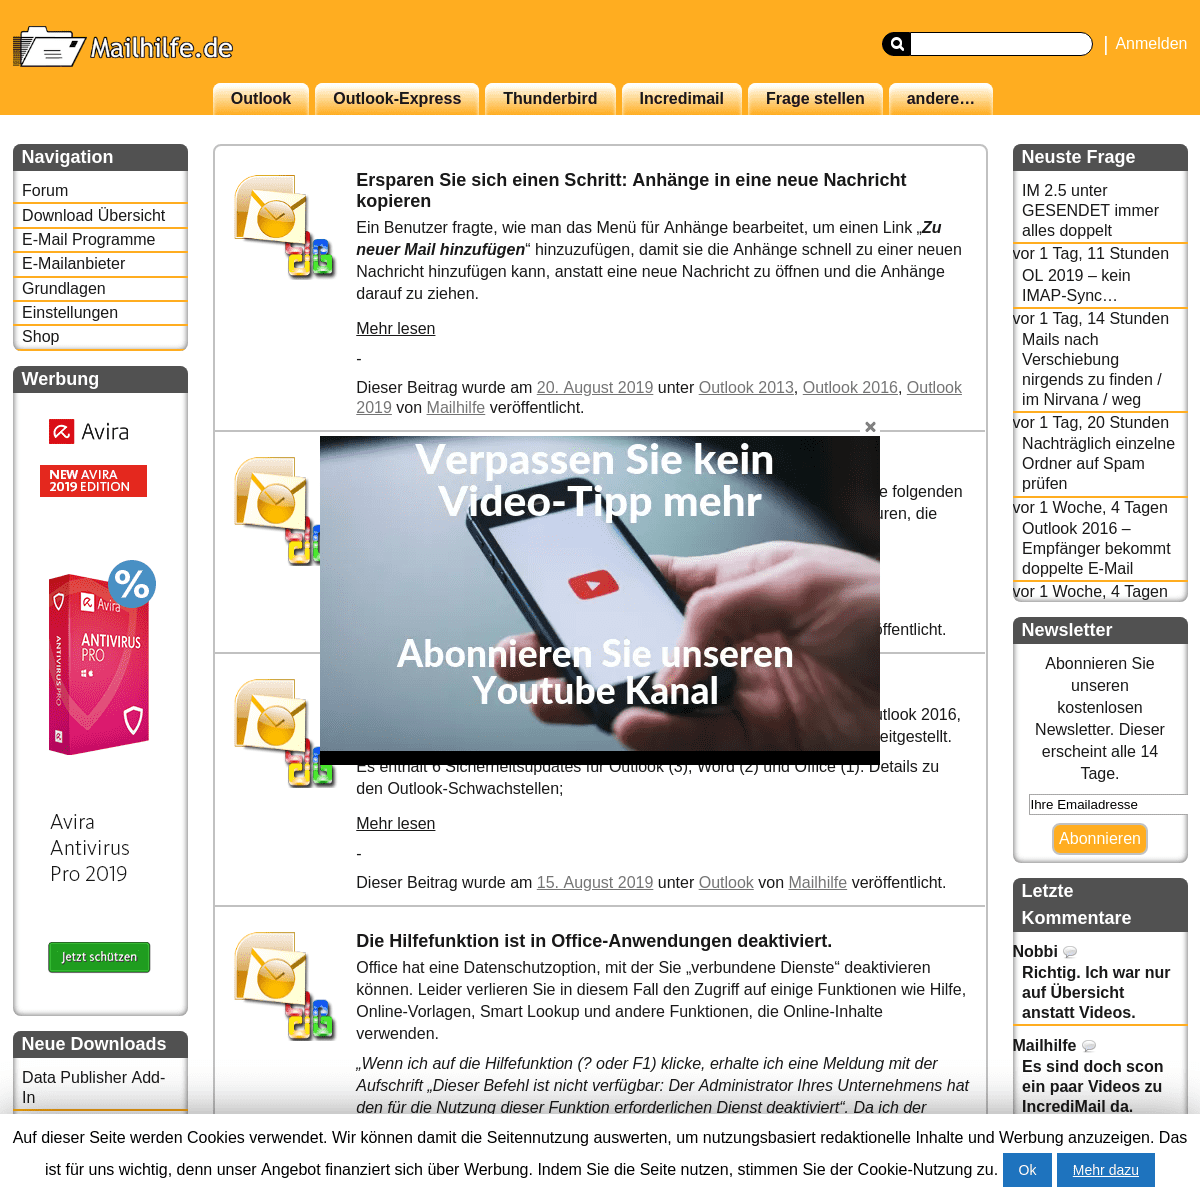 Mailhilfe.de › Alles über Outlook, Thunderbird, IncrediMail & Co › Mailhilfe.de